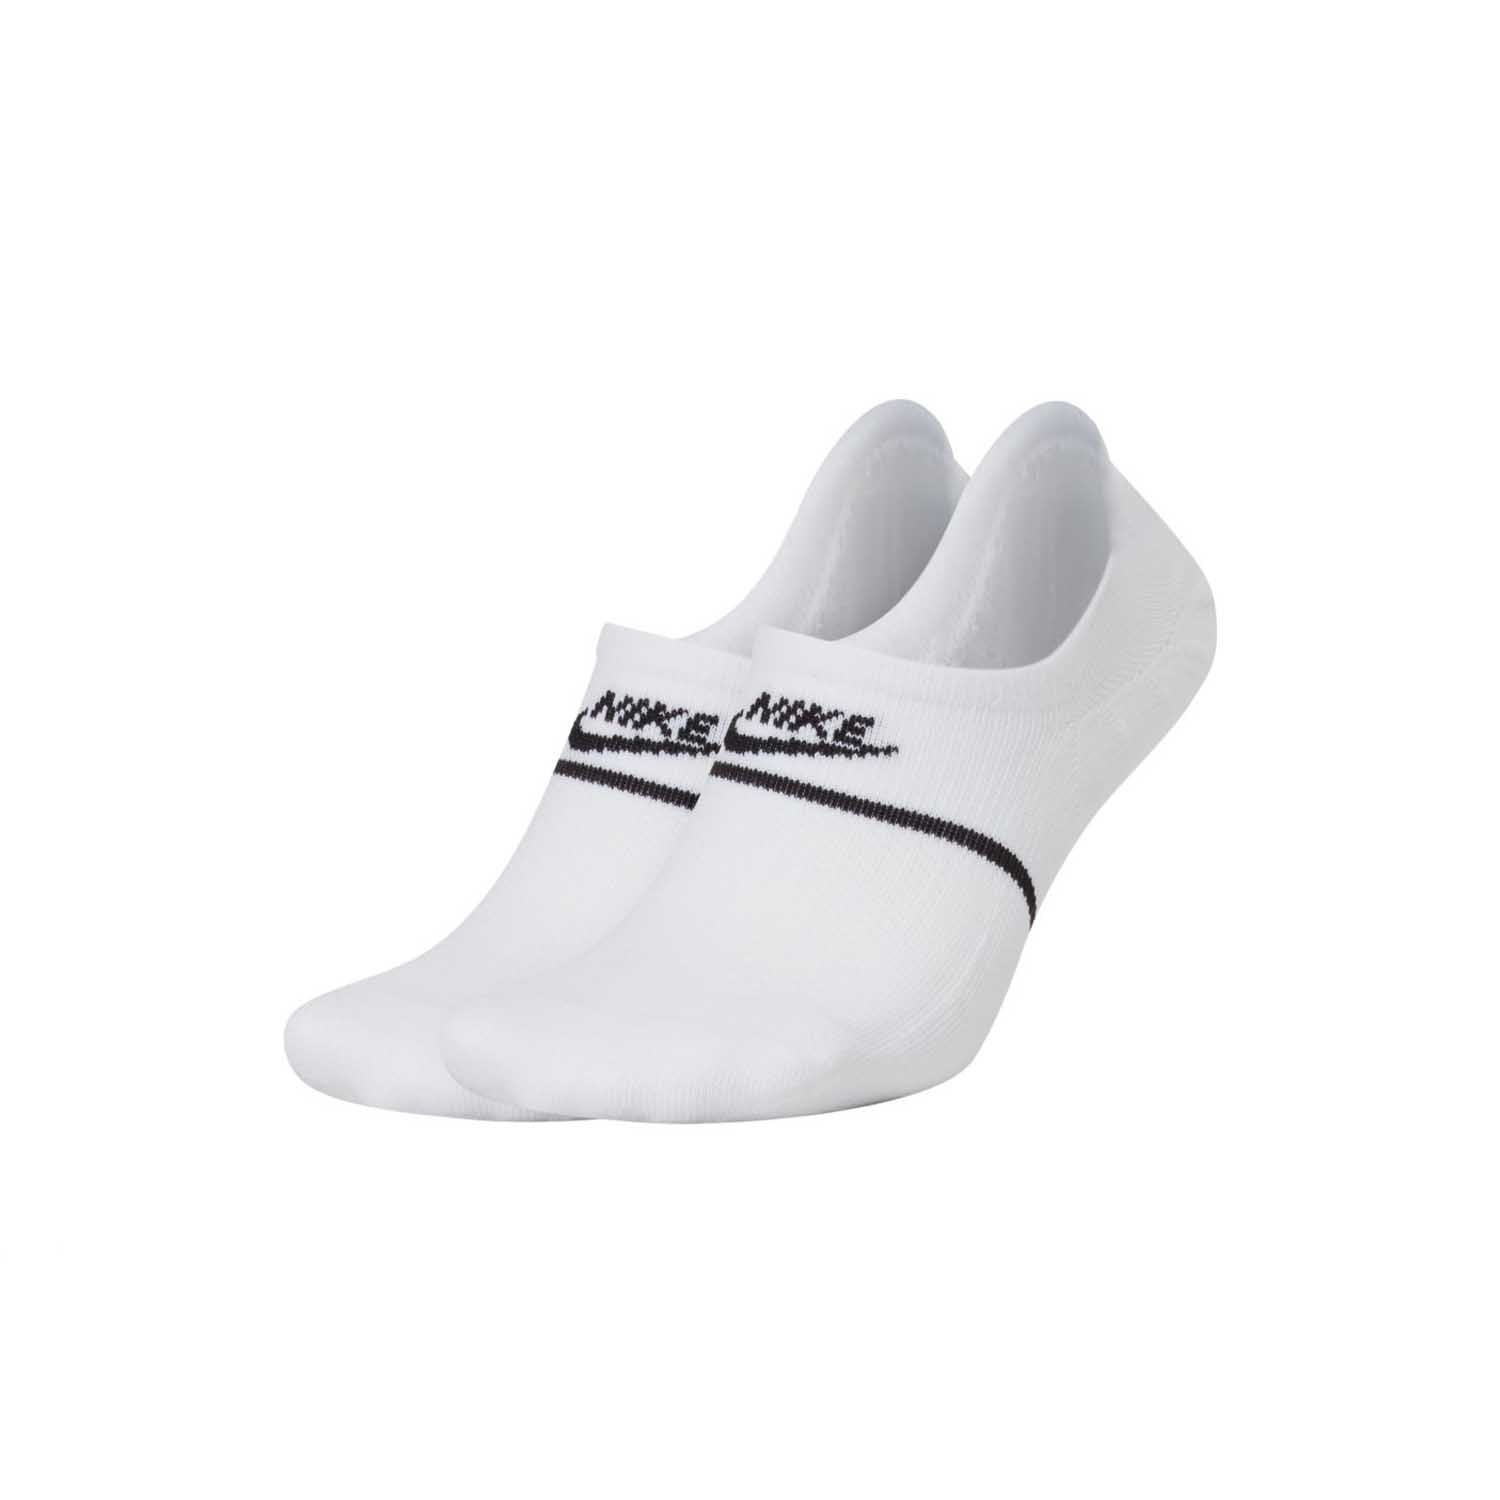 Nike SNKRS Socks White/Black